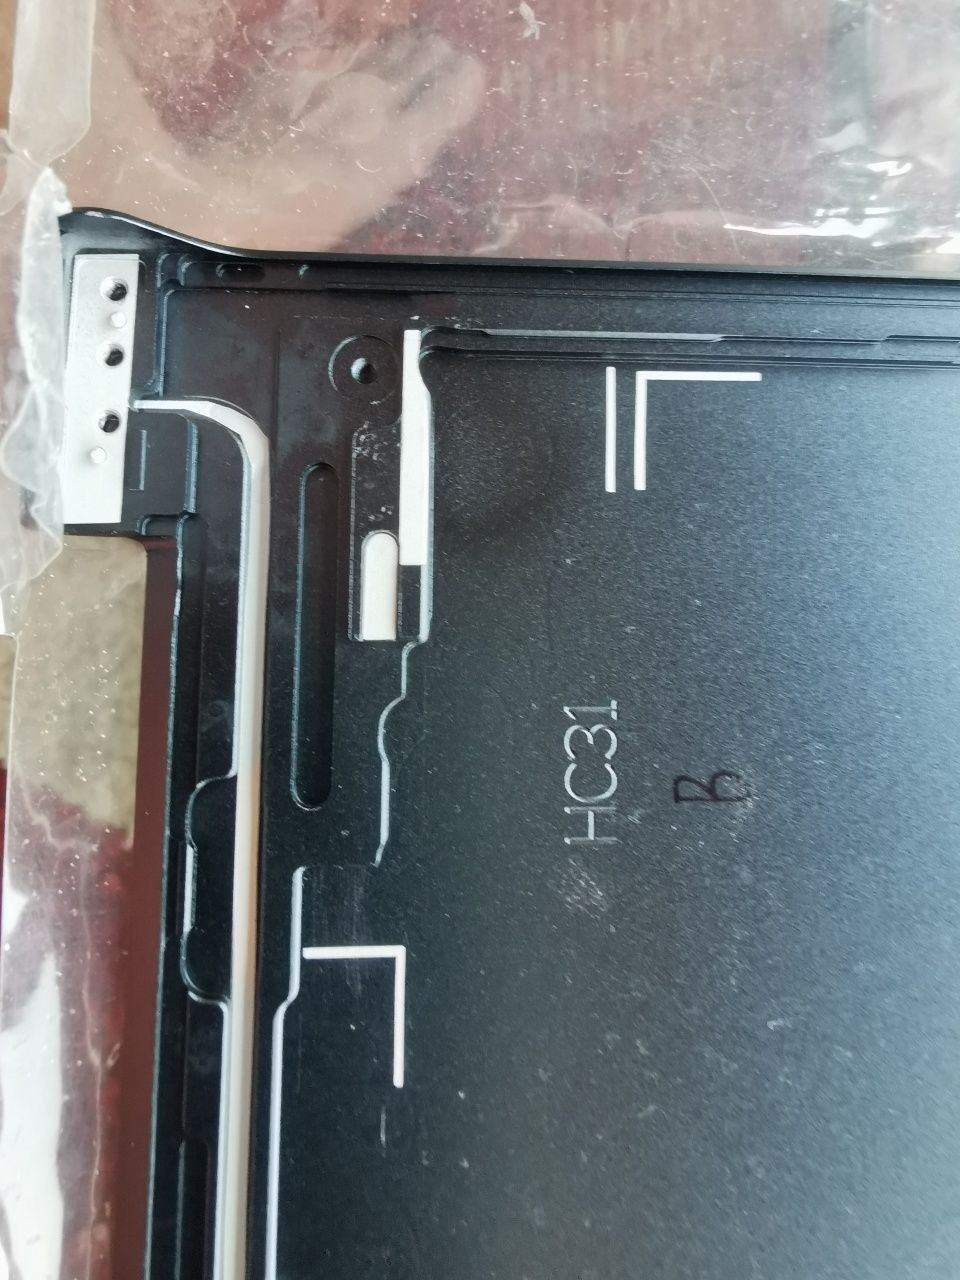 Capac laptop Samsung N900X3C, D, E, K